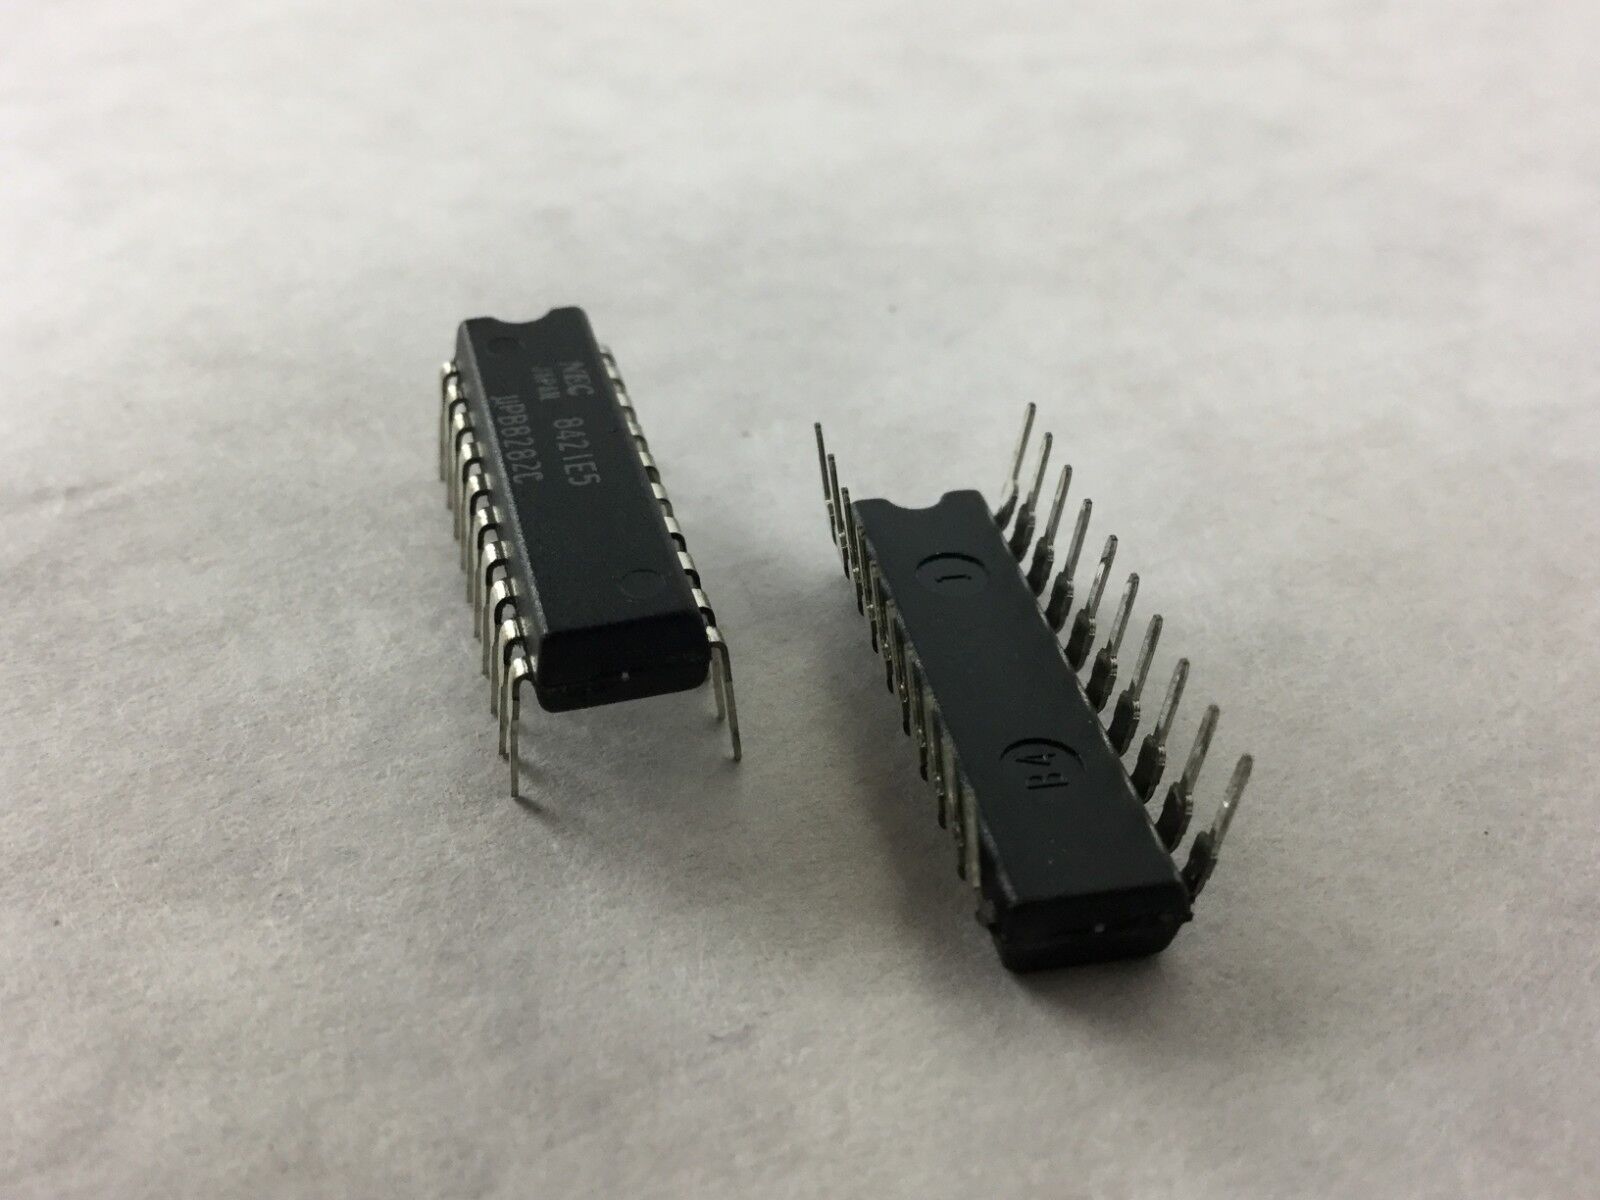 NEC  8421E5 Transistor  20 Pin Dip   Lot of 4  NEW